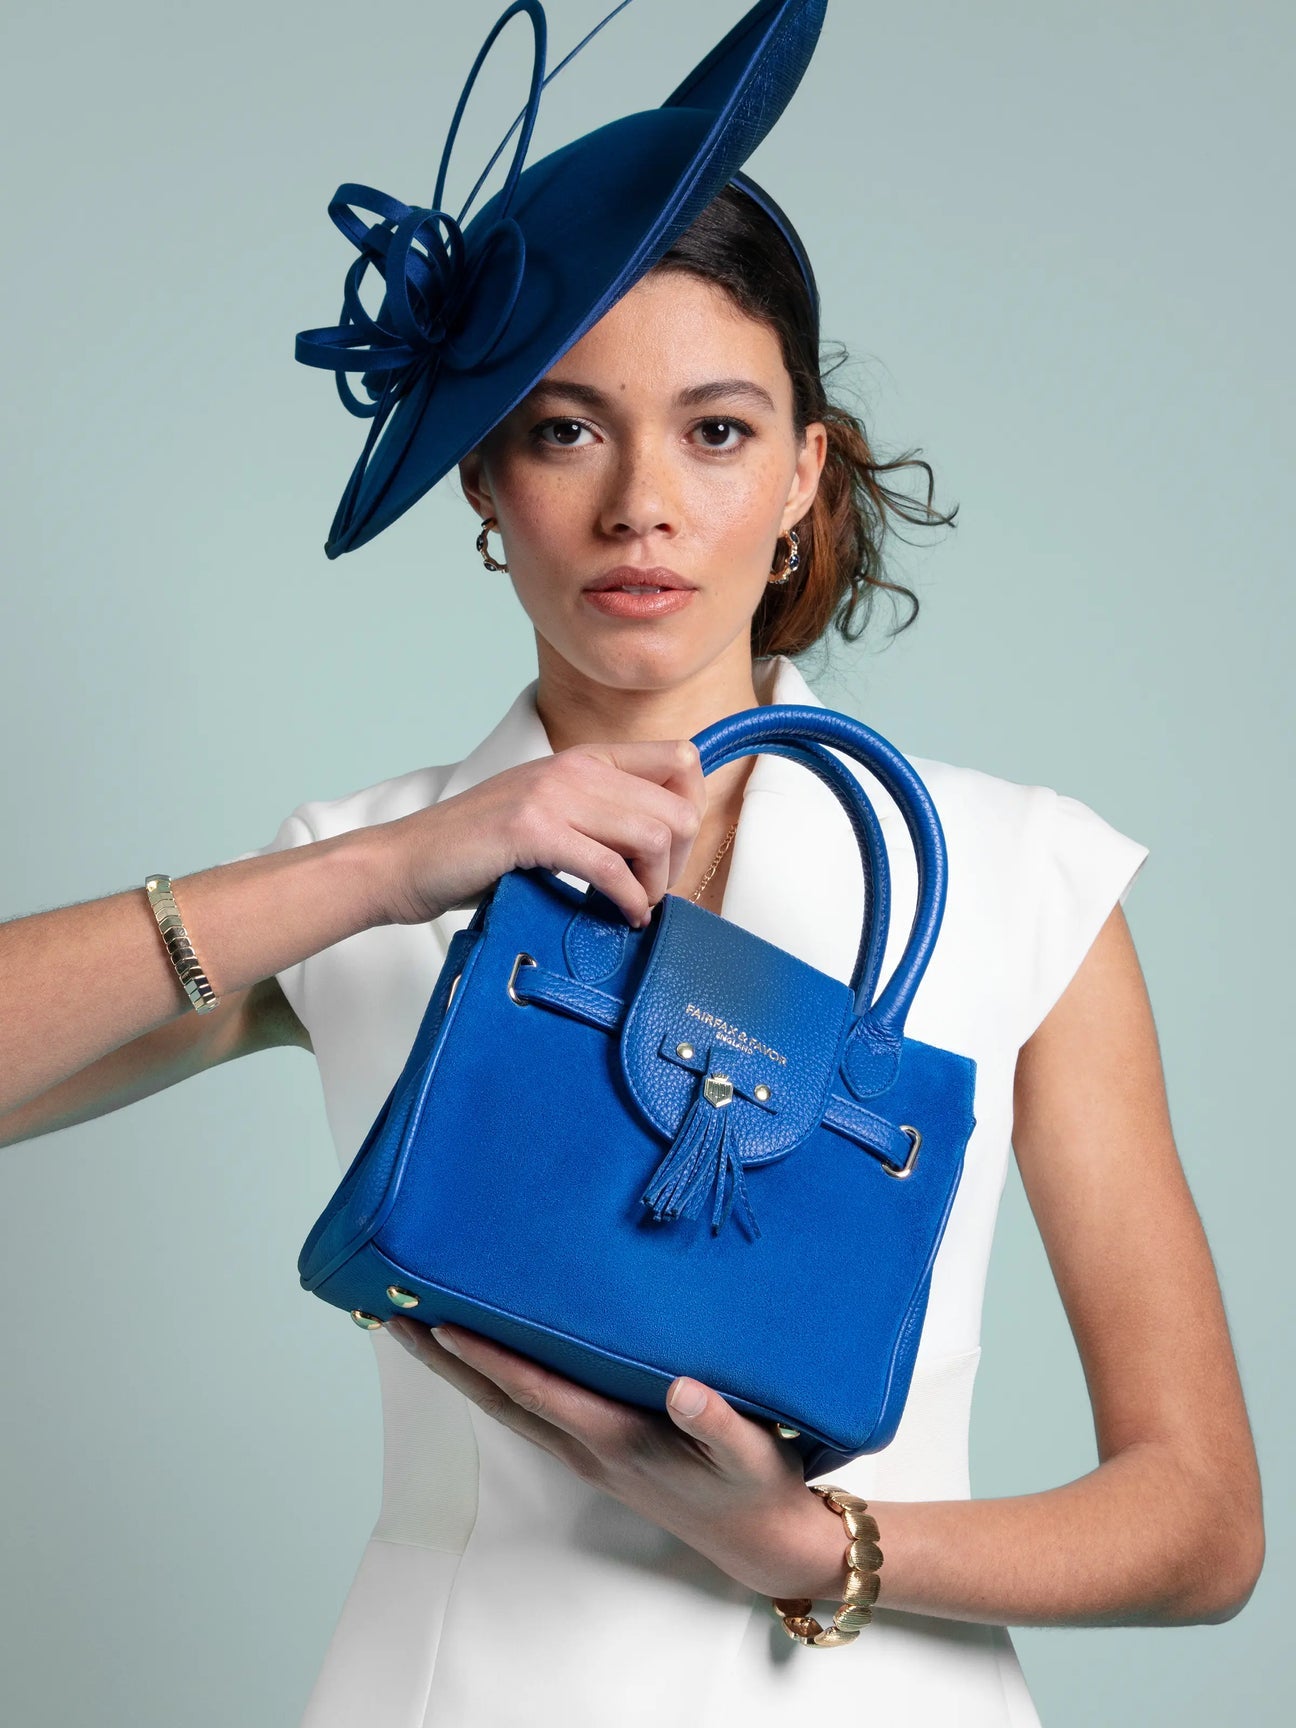 Windsor Women's Mini Handbag - Porto Blue Suede